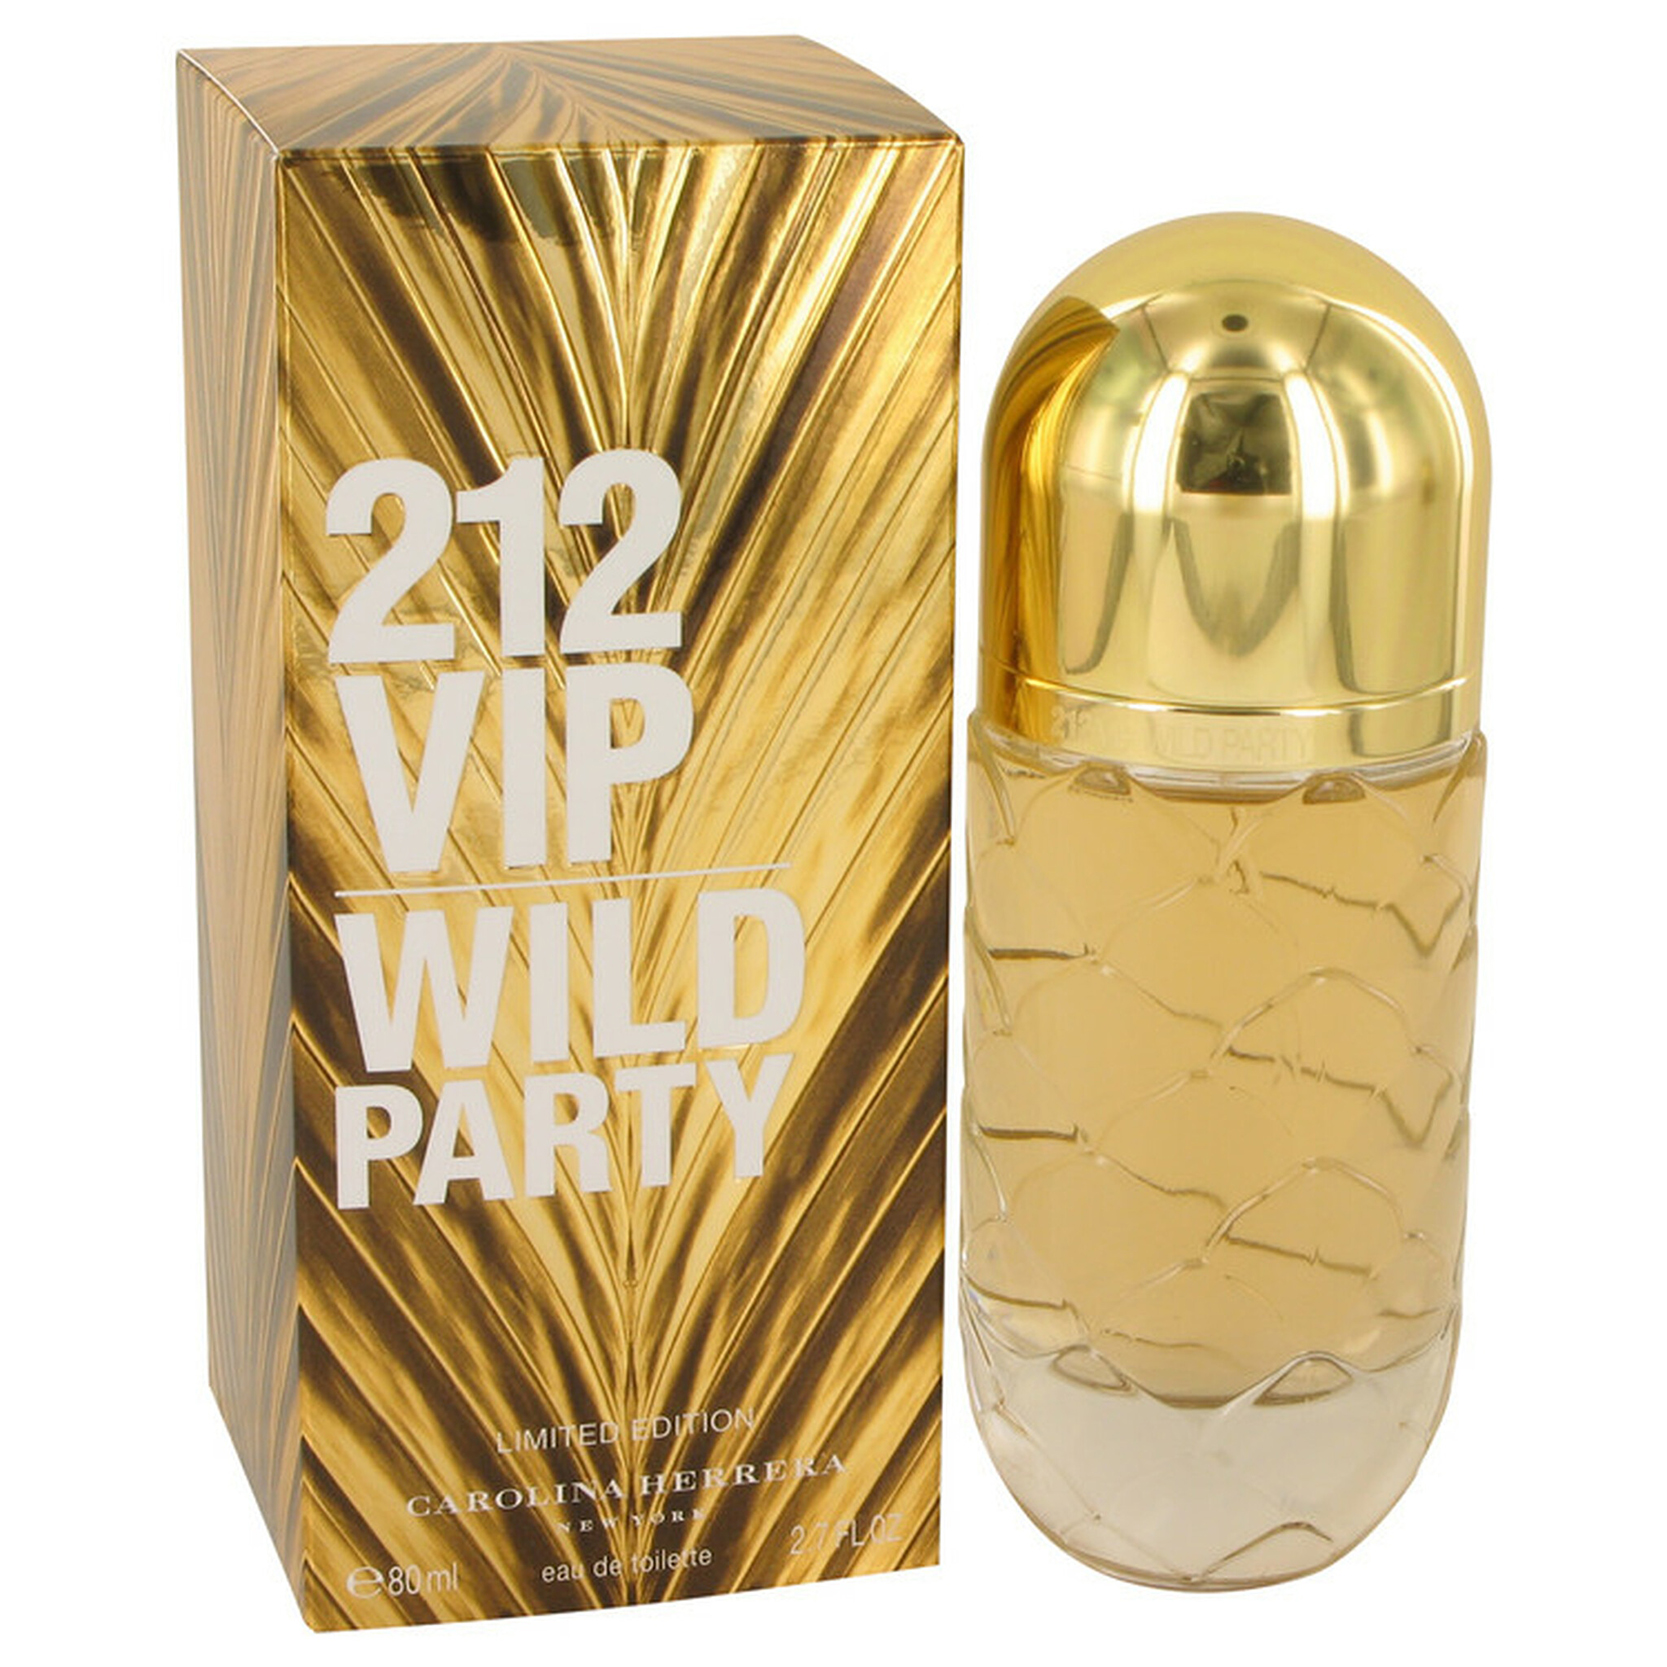 212 Vip Wild Party By Carolina Herrera Limited Edition Fragrance Madness